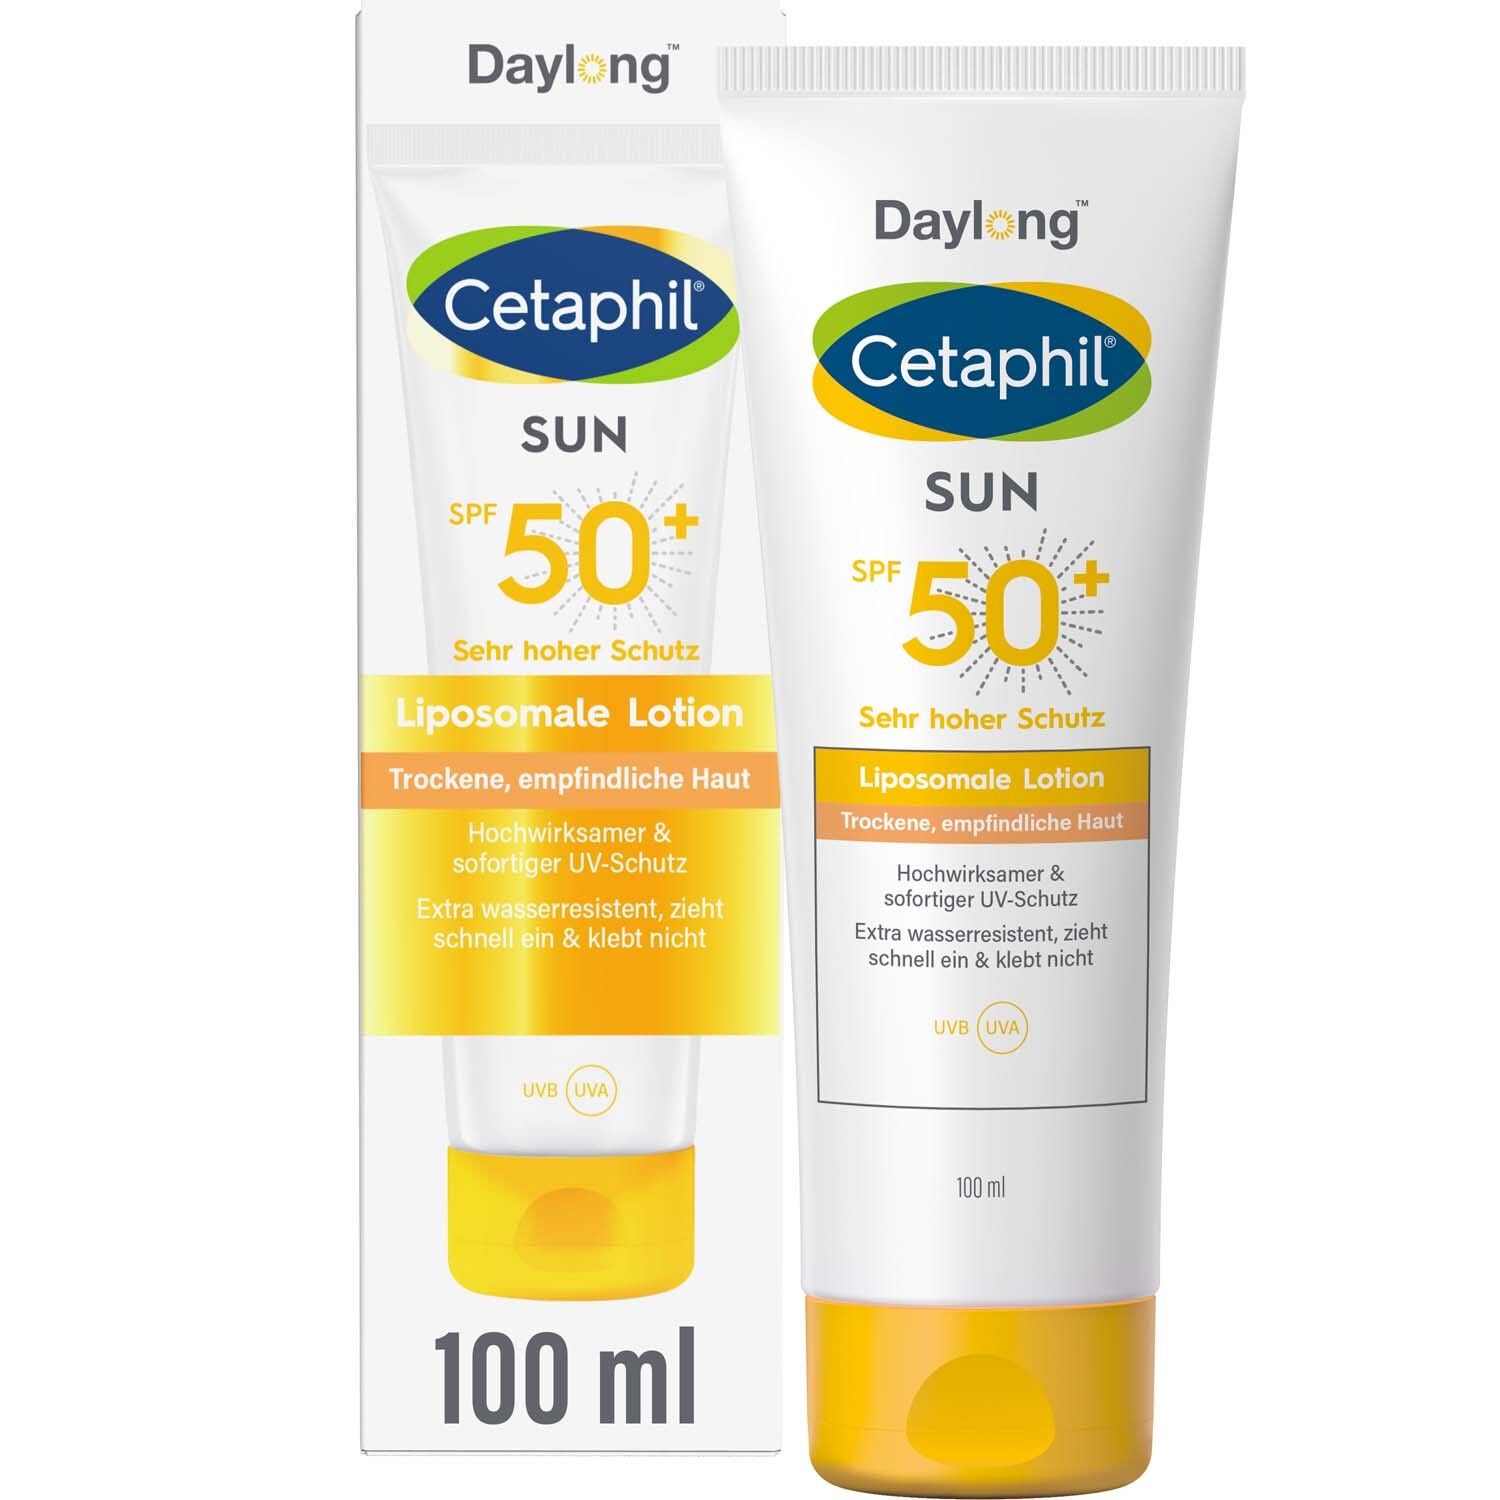 Cetaphil SUN Liposomale Lotion SPF 50+ Feuchtigkeitsspendende Sonnenschutzlotion